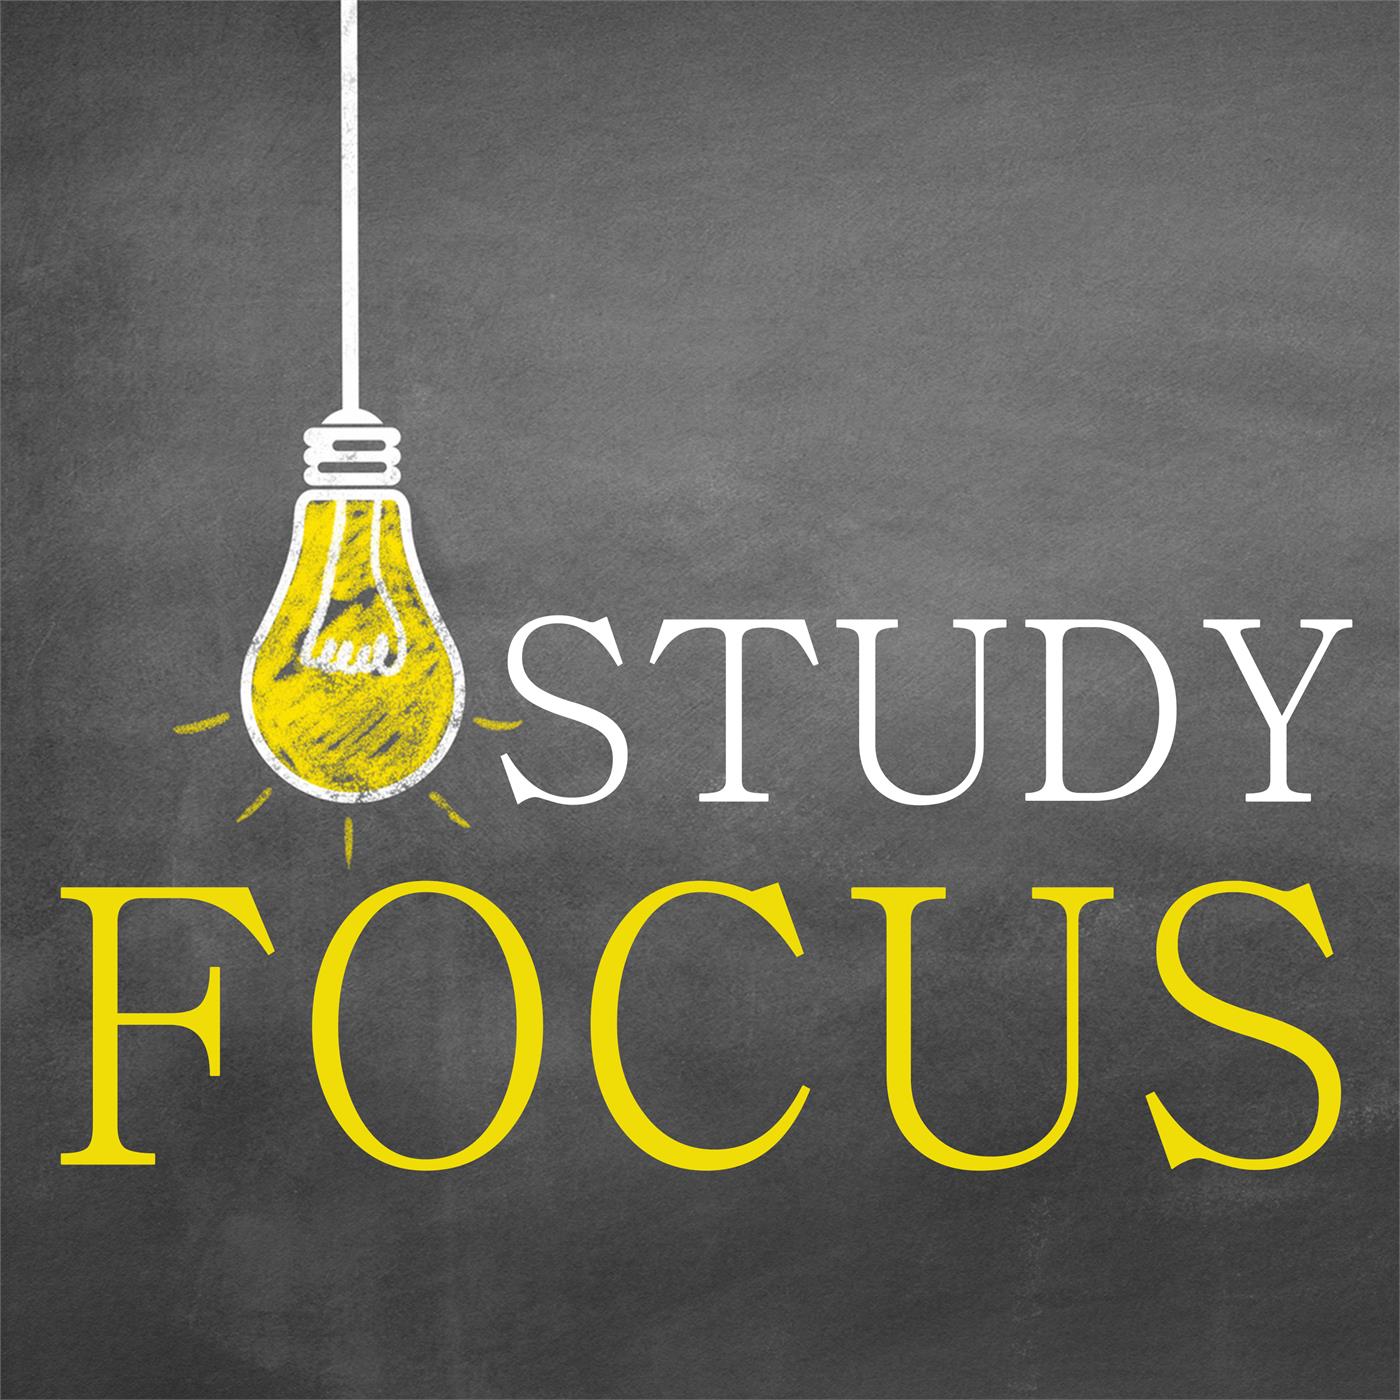 Study Focus